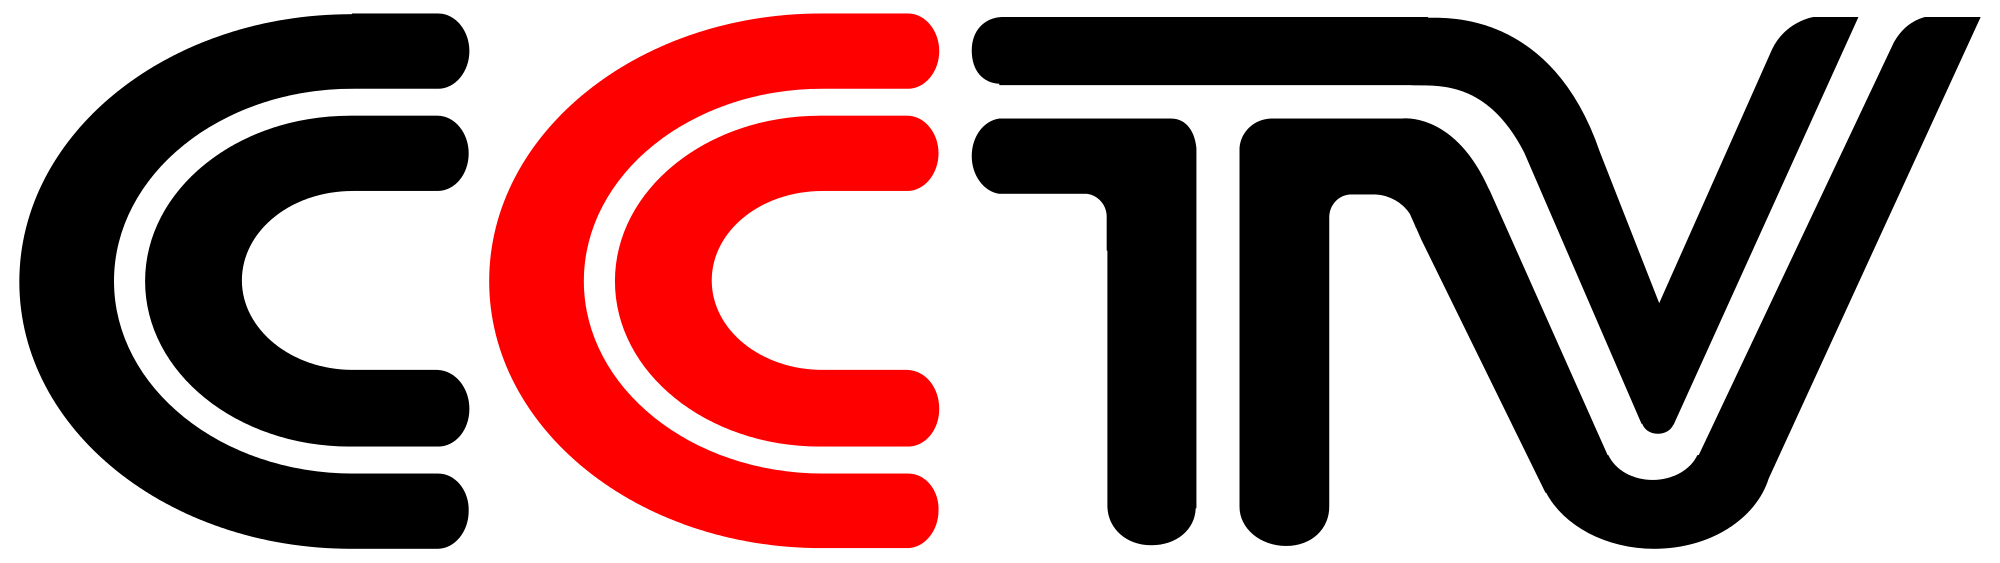 Cctv Logo - ClipArt Best